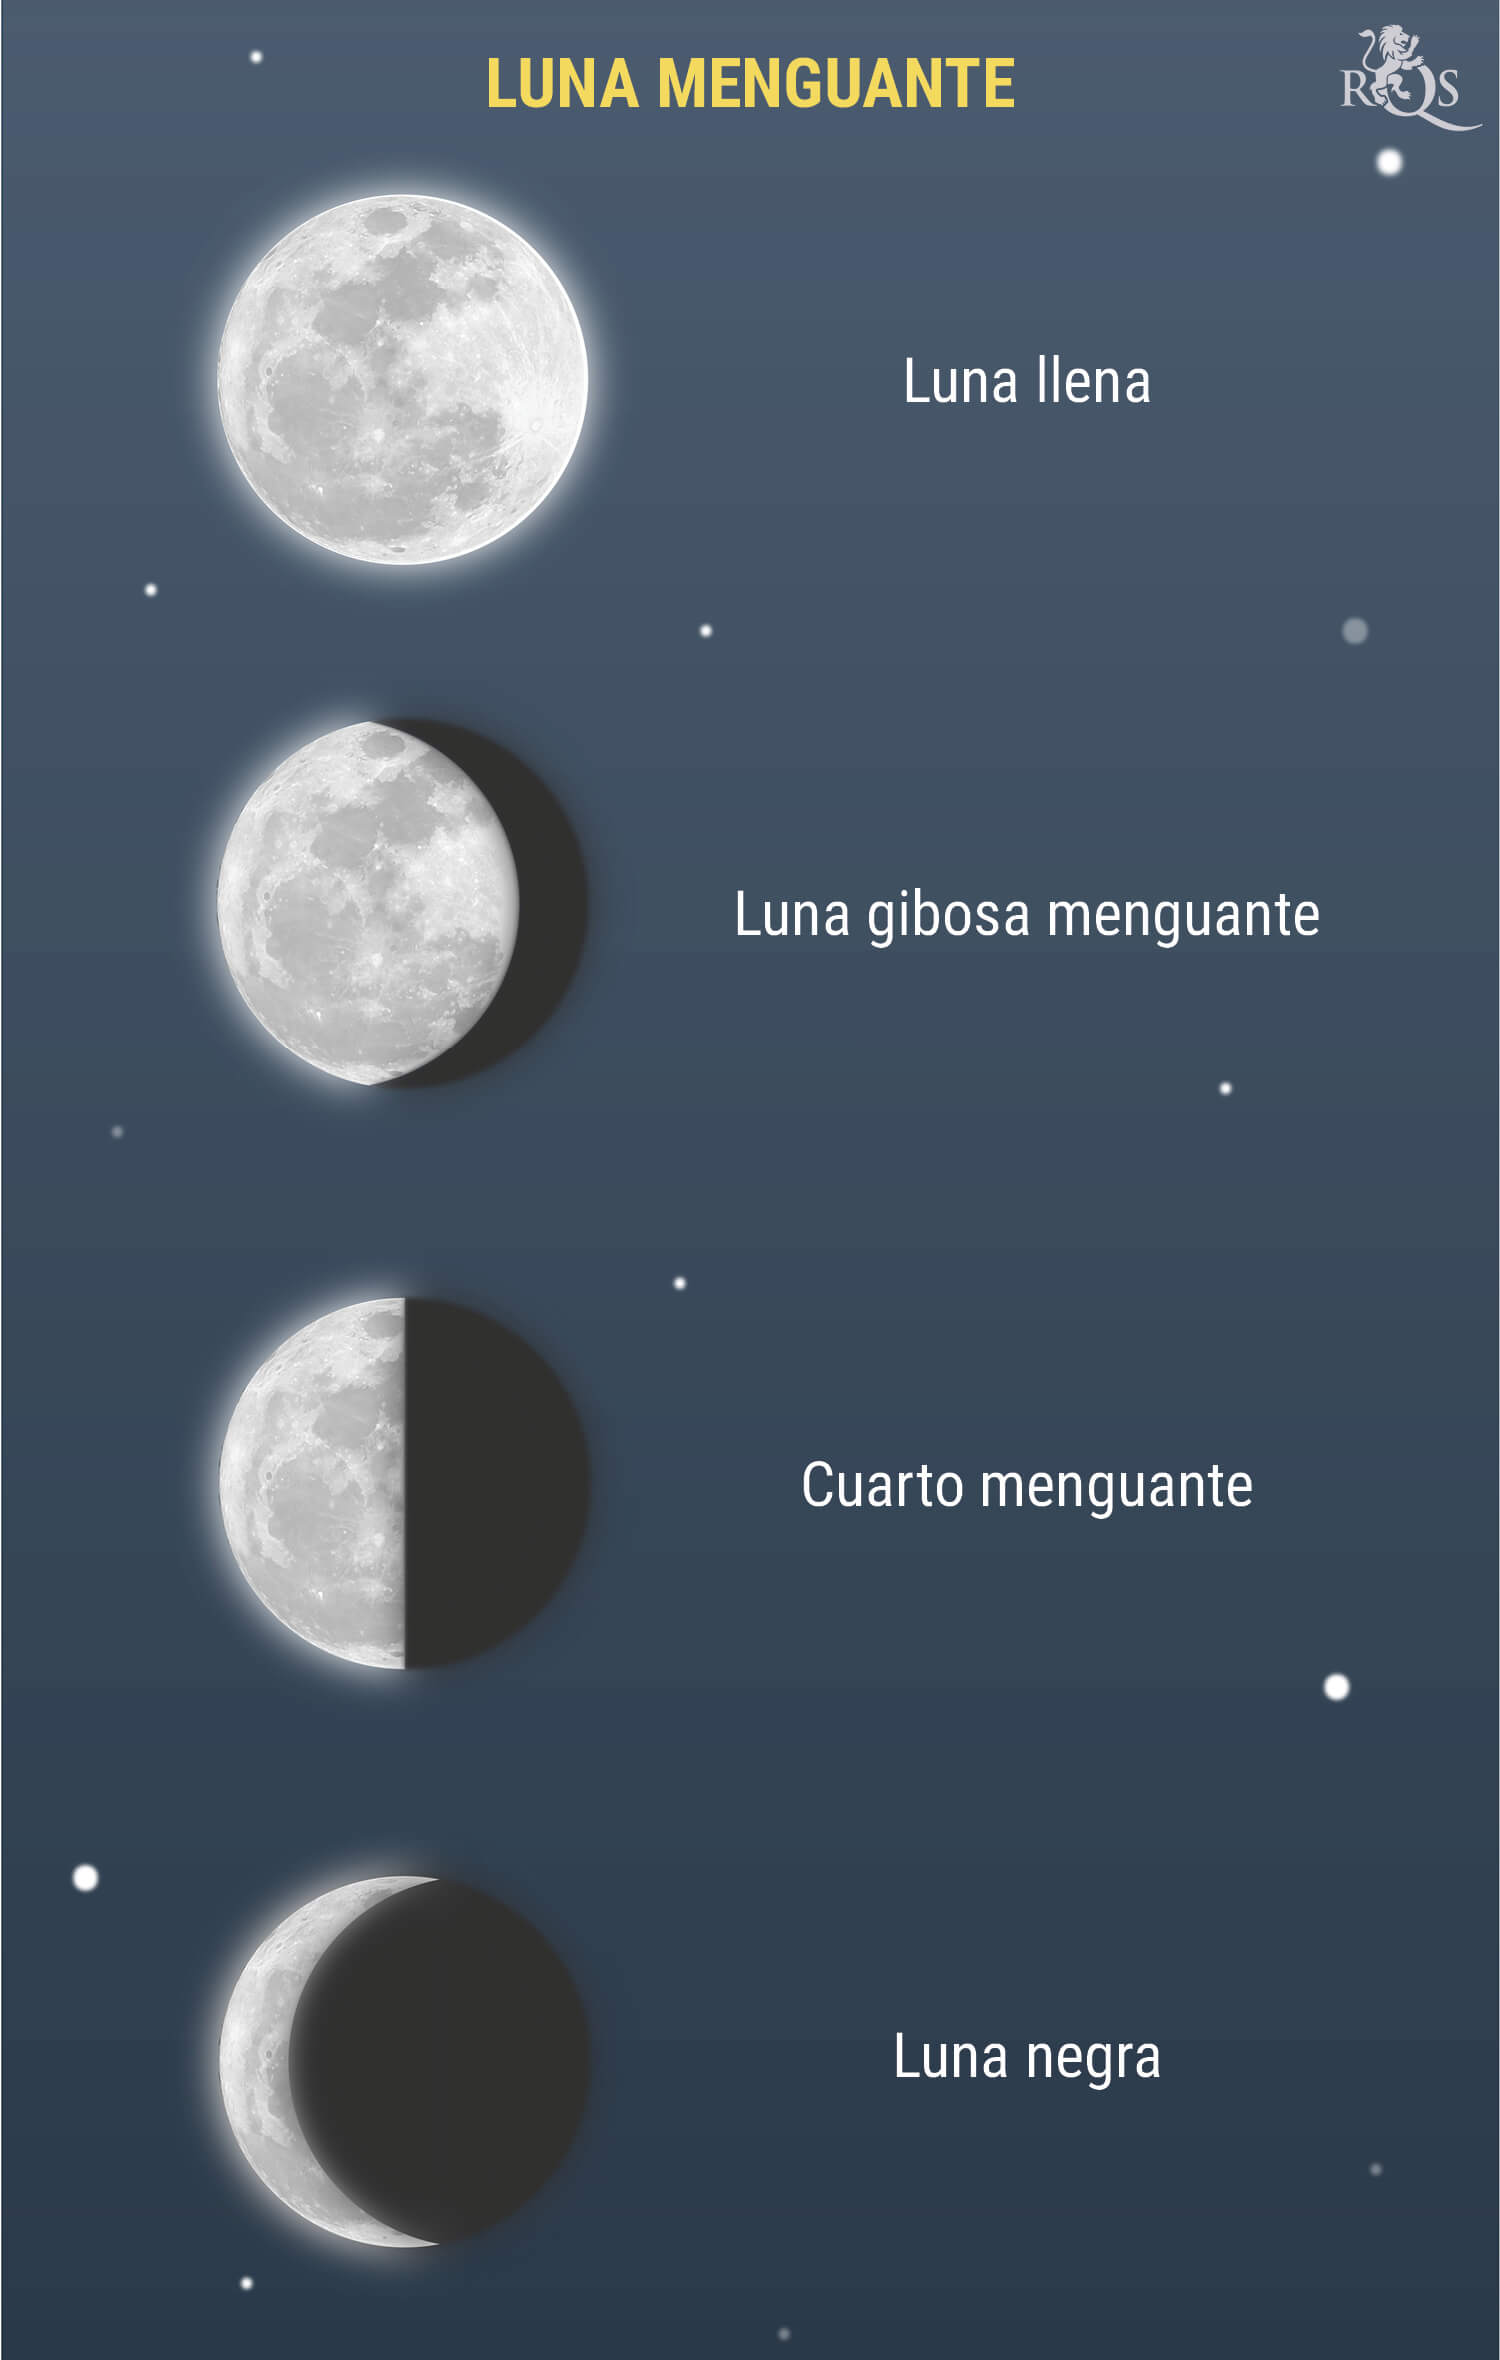 Luna menguante